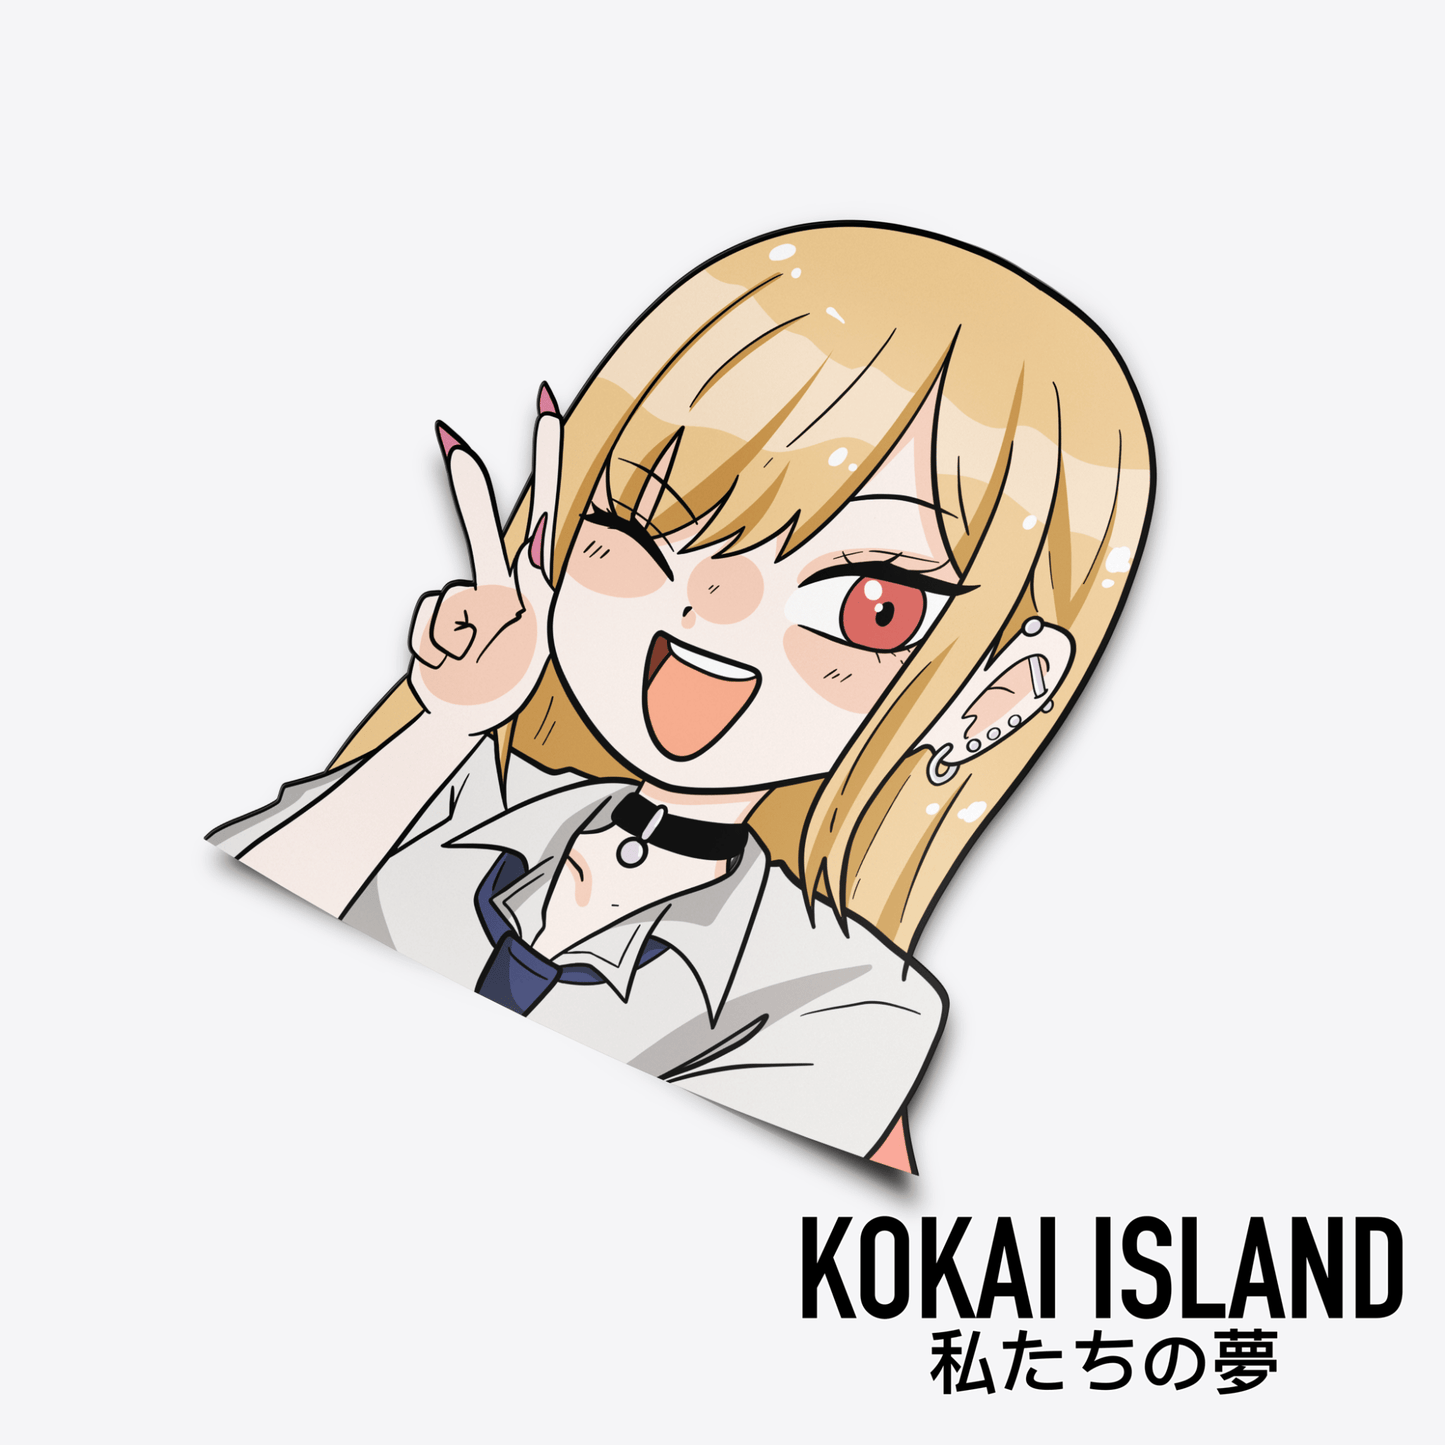 Cosplay Lover DecalDecalKokai Island